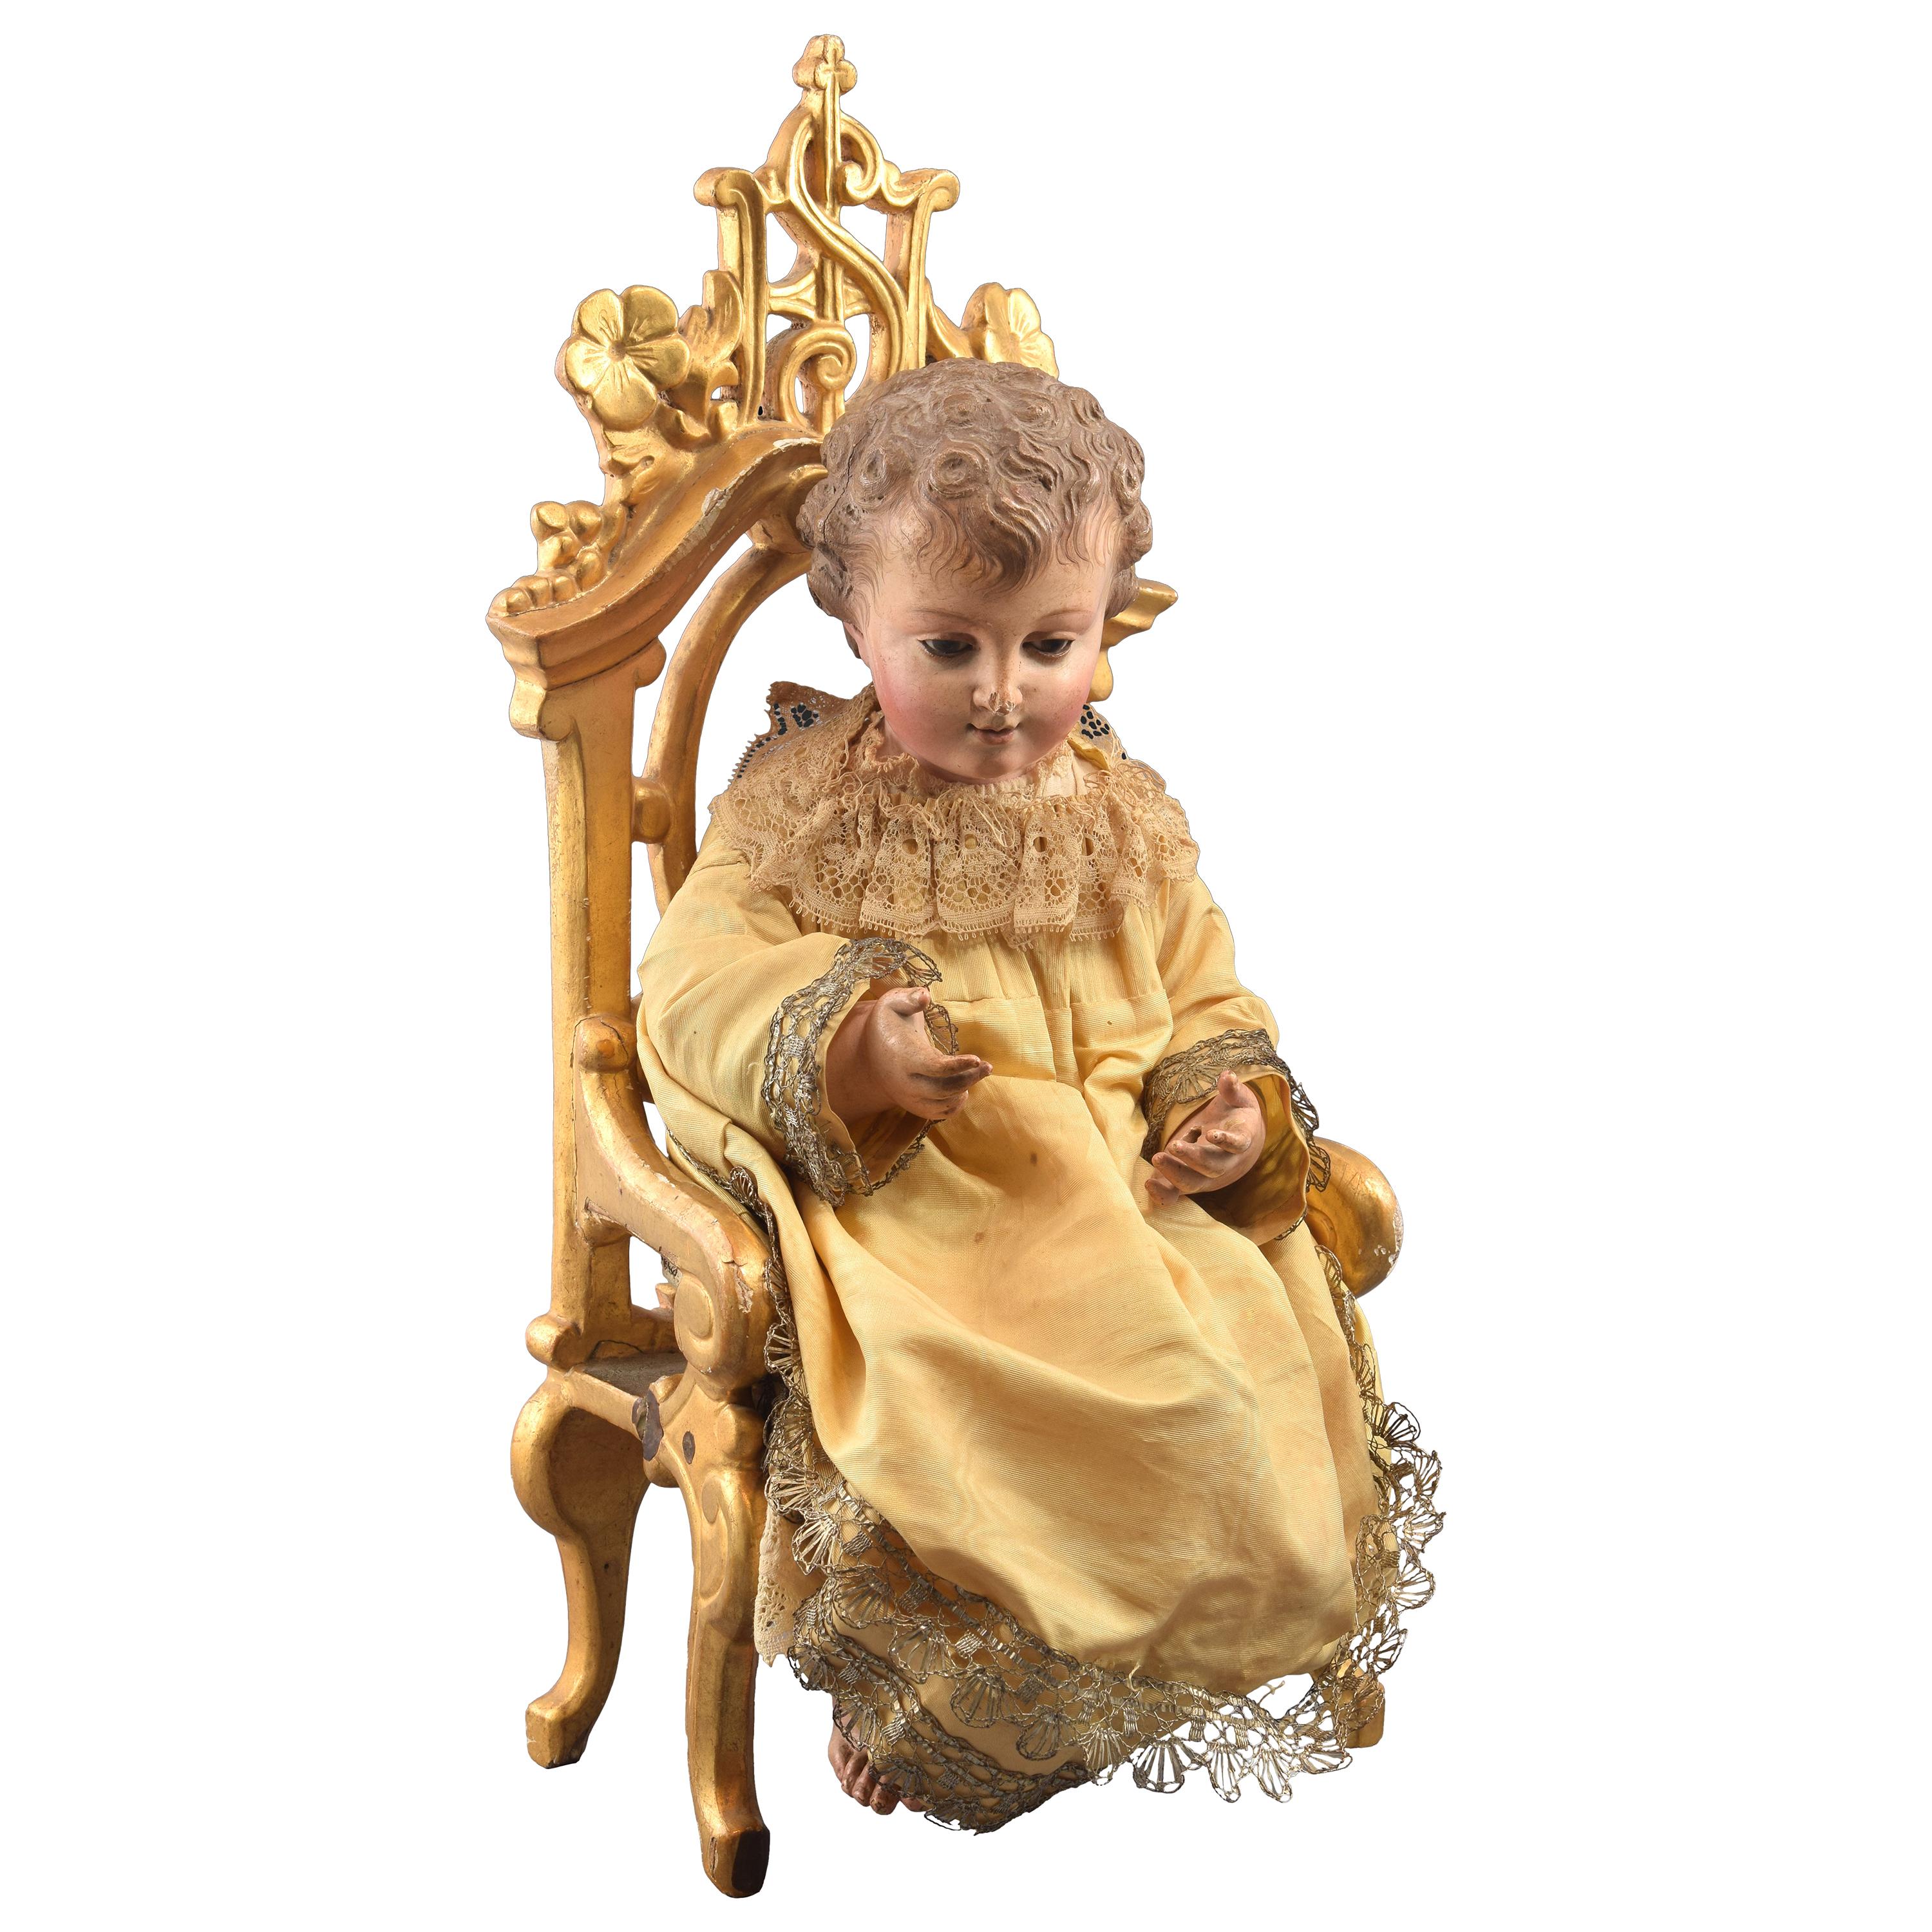 Child Jesus on Throne, Wood, Textile, Metal, Etc., Spain, 19th Century